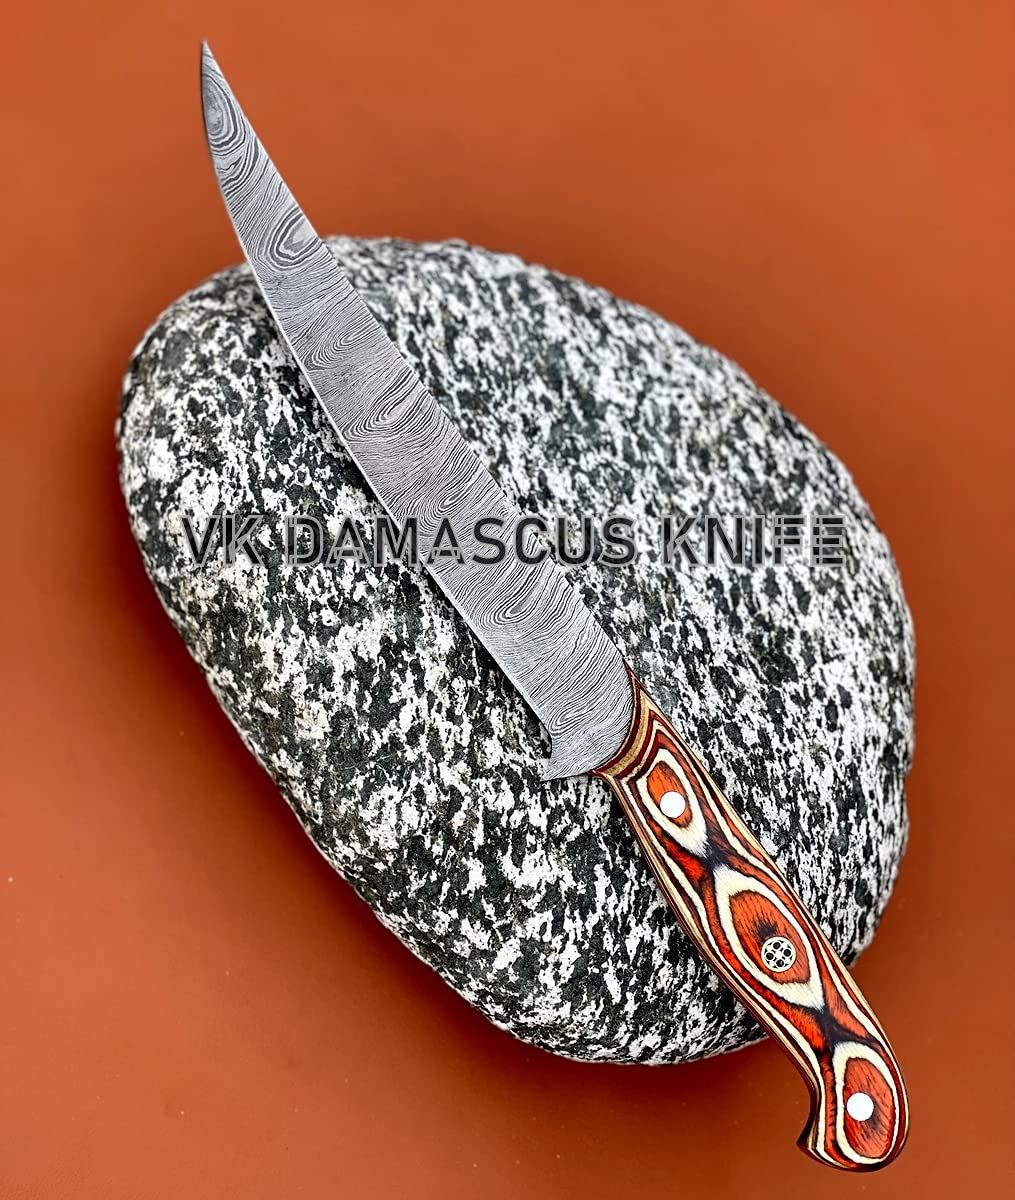 Damascus Boning Knife Fillet Knife 13" Handmade Thin Sharp Progessional Chef Kitchen Knives with Leather Sheath Wood Handle vk5524